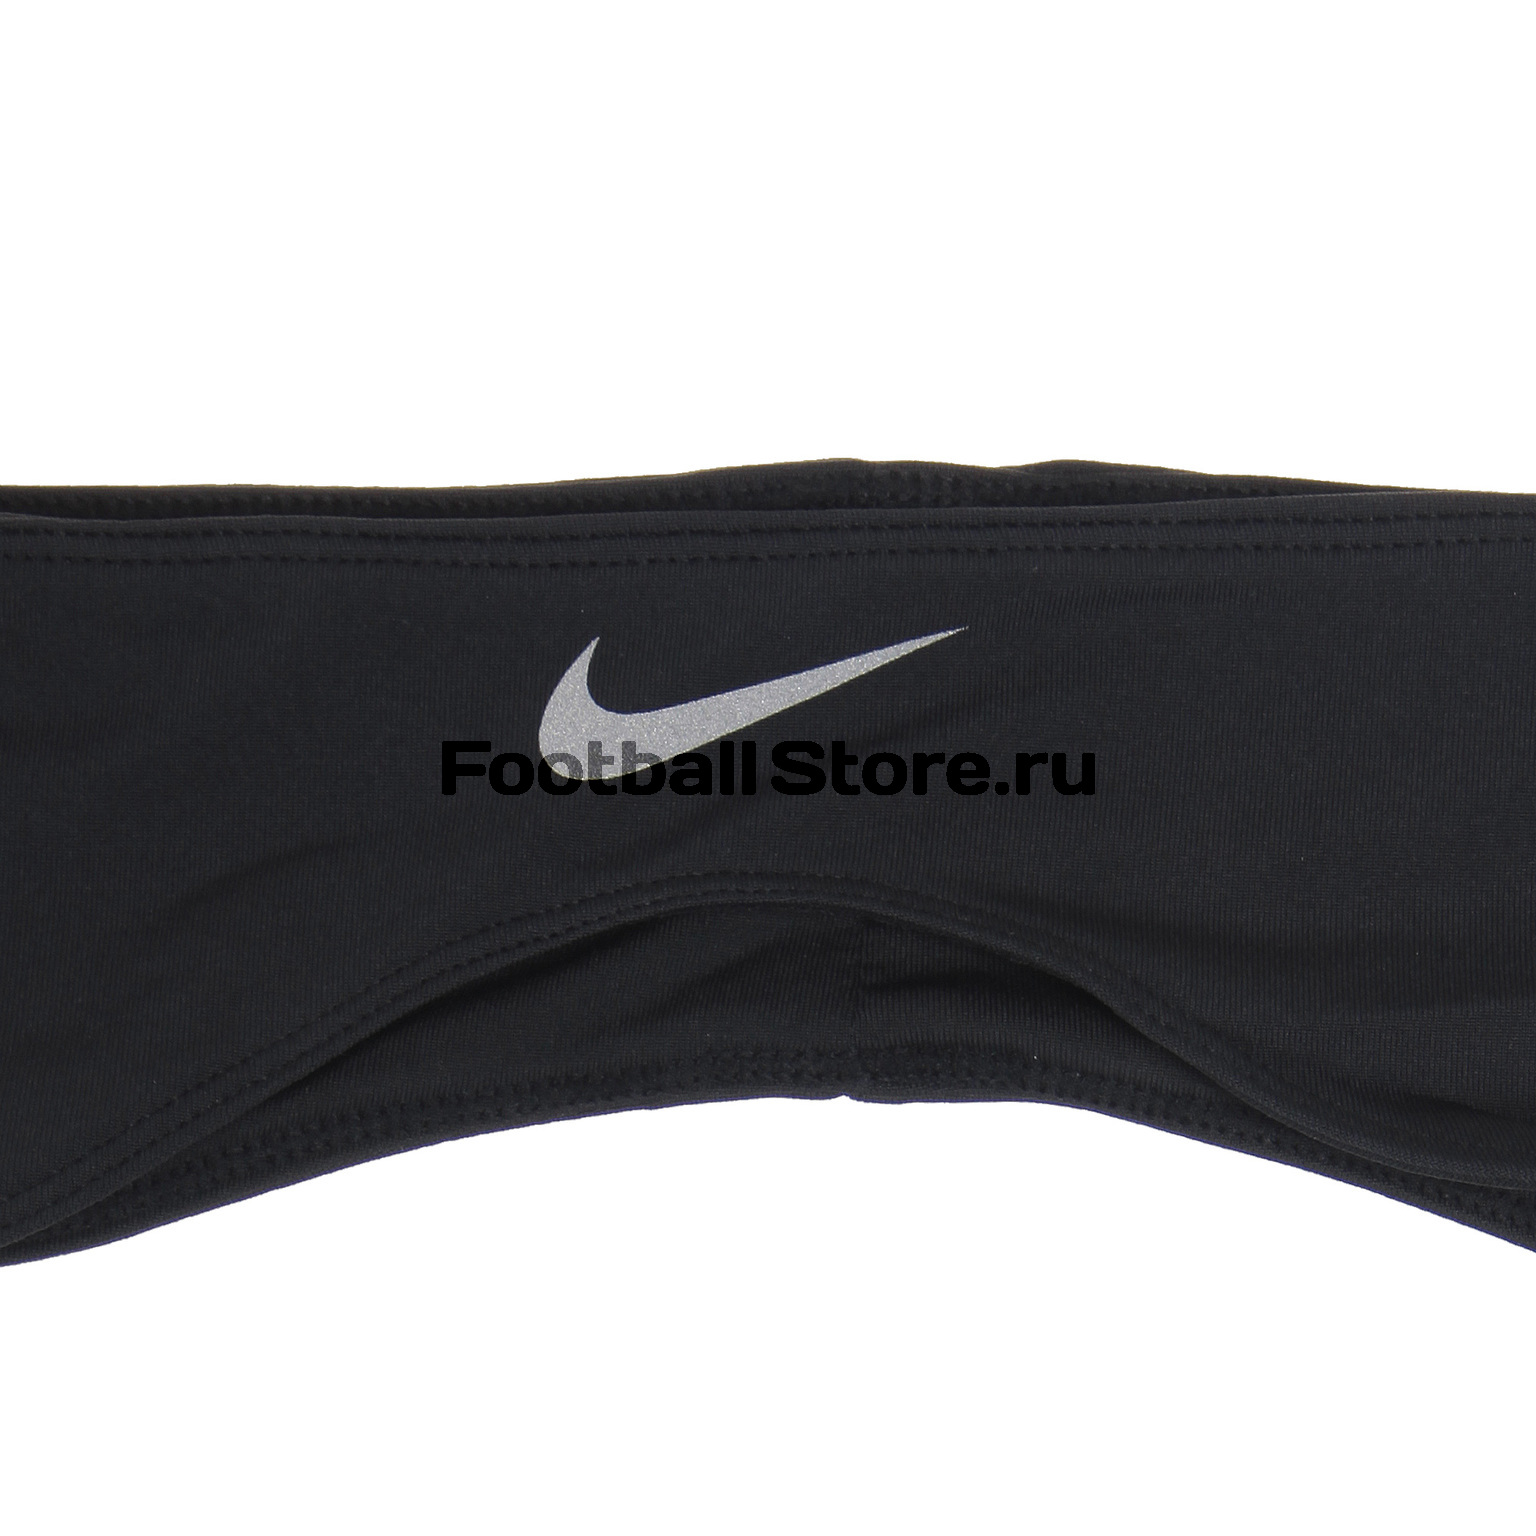 Набор для бега (мужской) Nike Dry Fit N.RC.02.001.LG